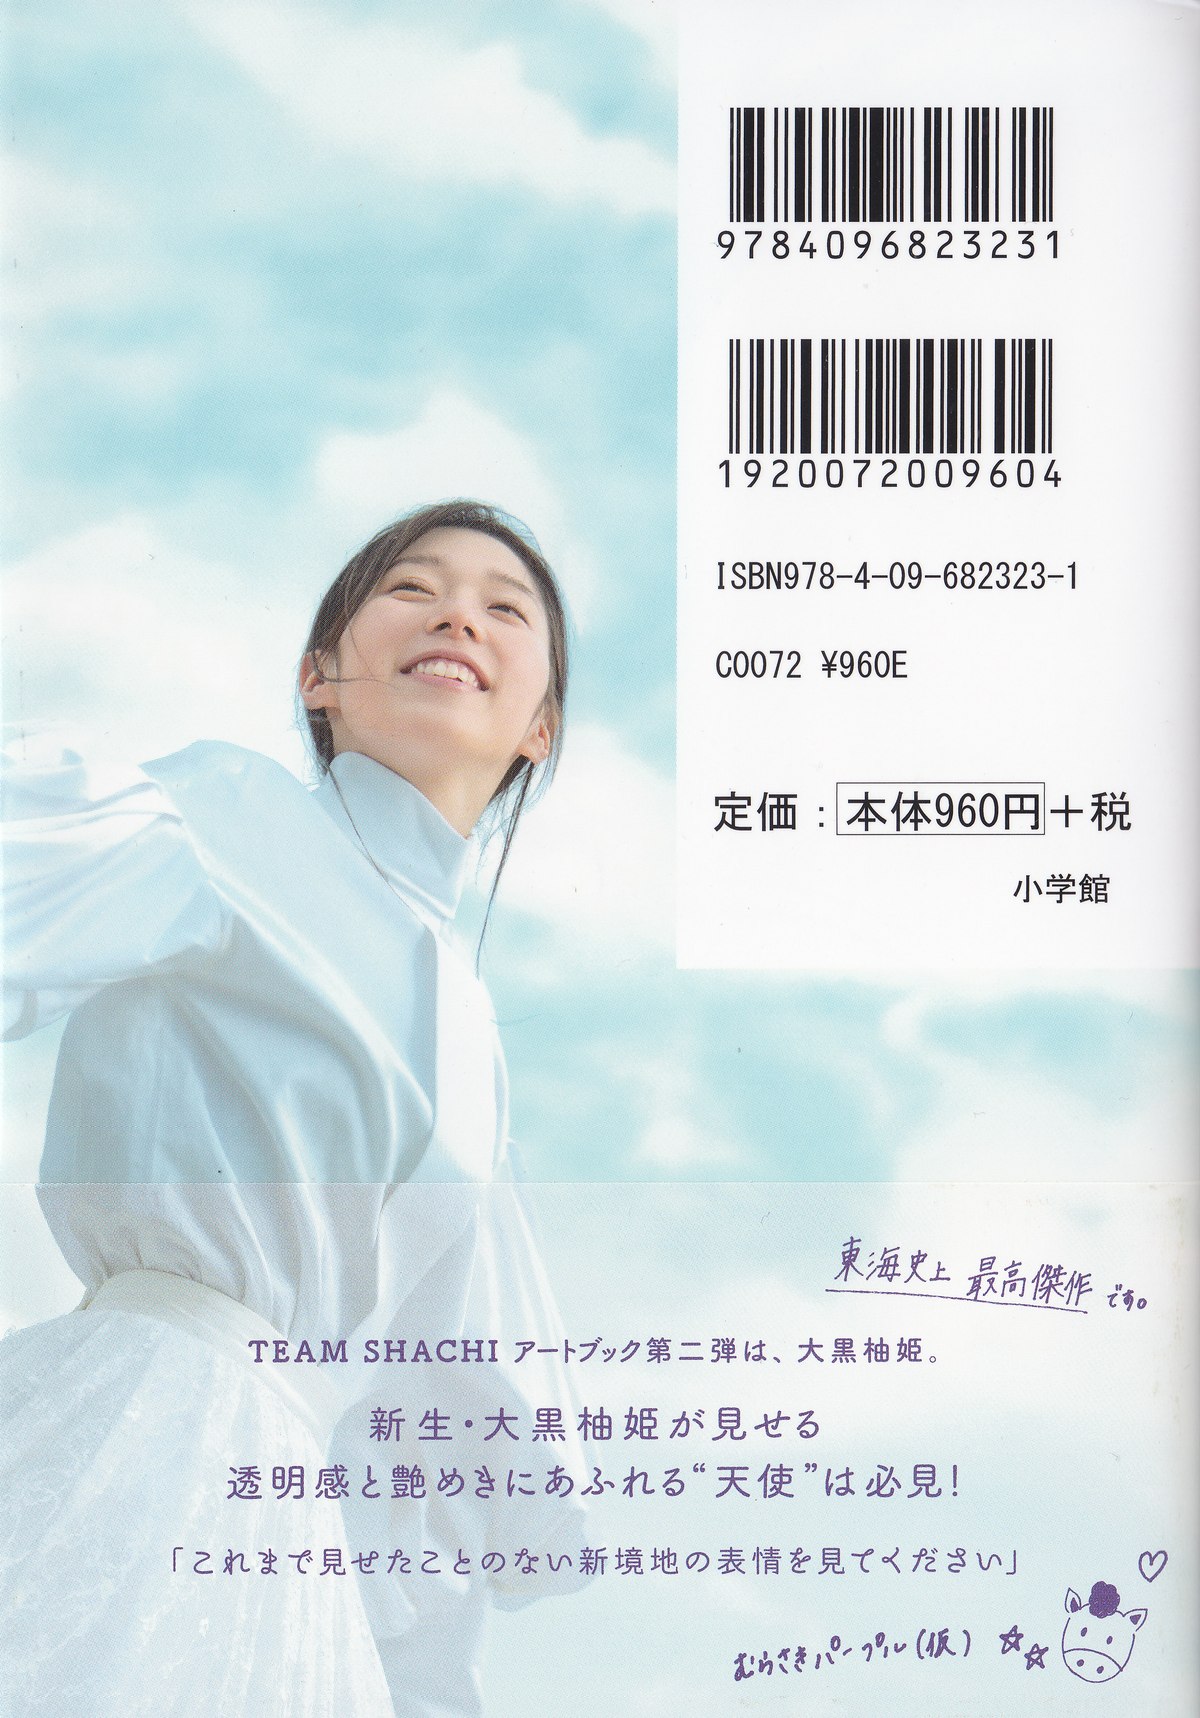 Photobook 2020 03 06 Yuzuki Oguro 大黒柚姫 Team Shachi Artbook Collection Vol 2 Reborn 0002 3029902039.jpg